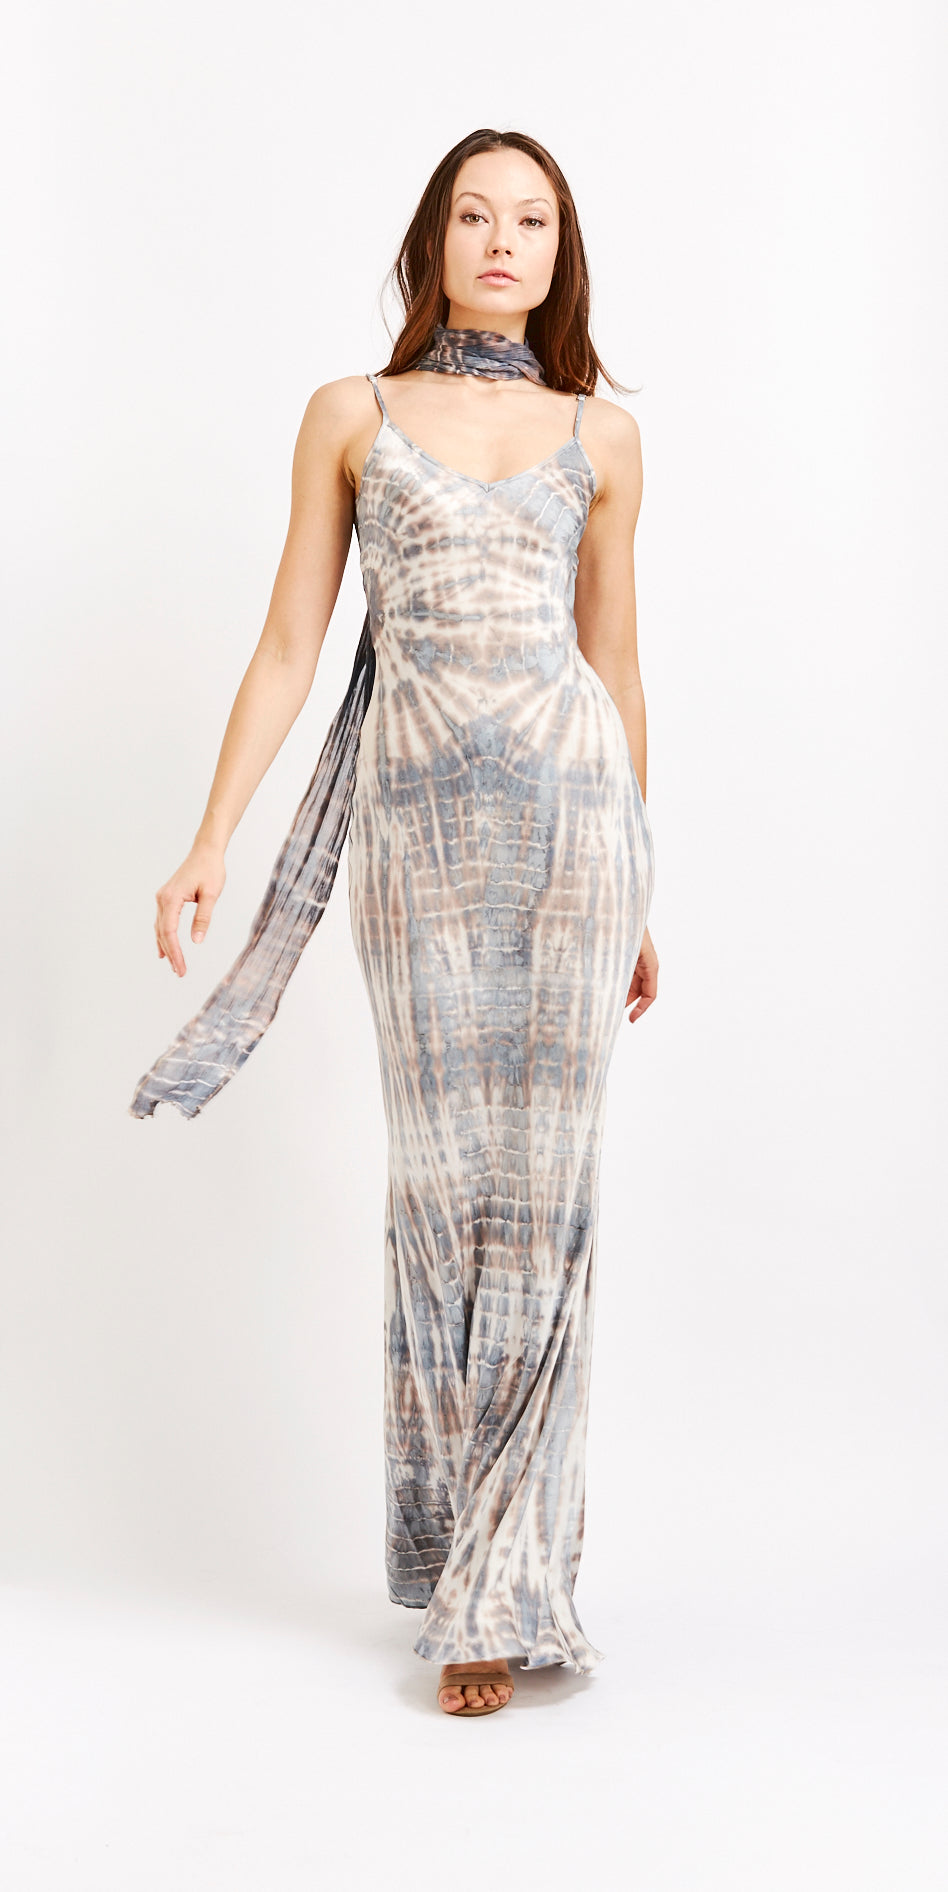 Shop 30 Slip Dresses for Every Occasion | Vogue